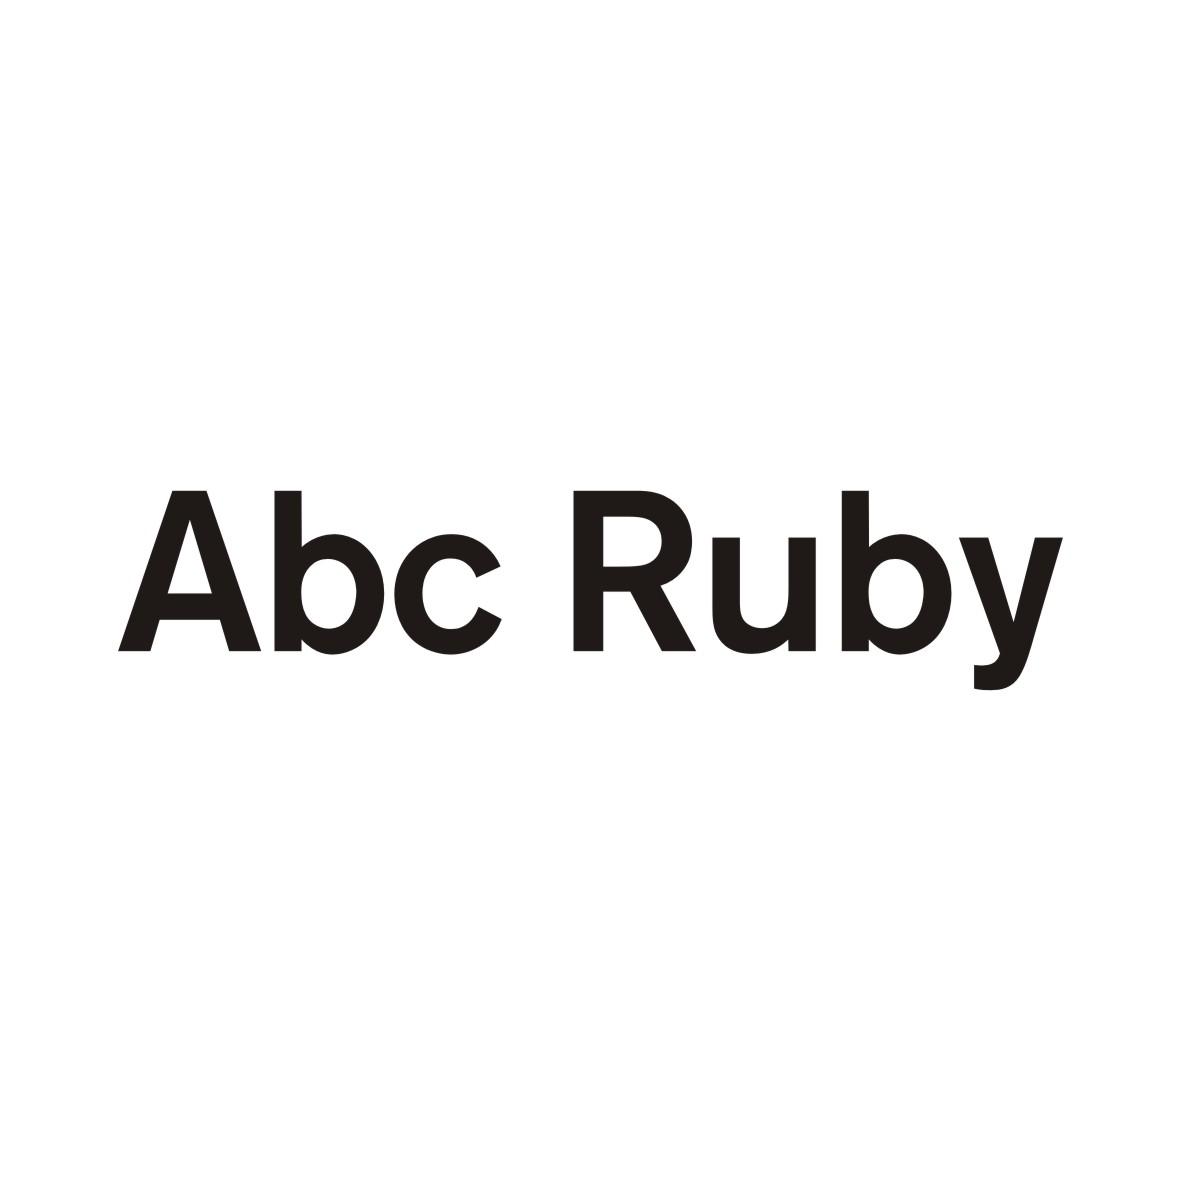 ABC RUBY